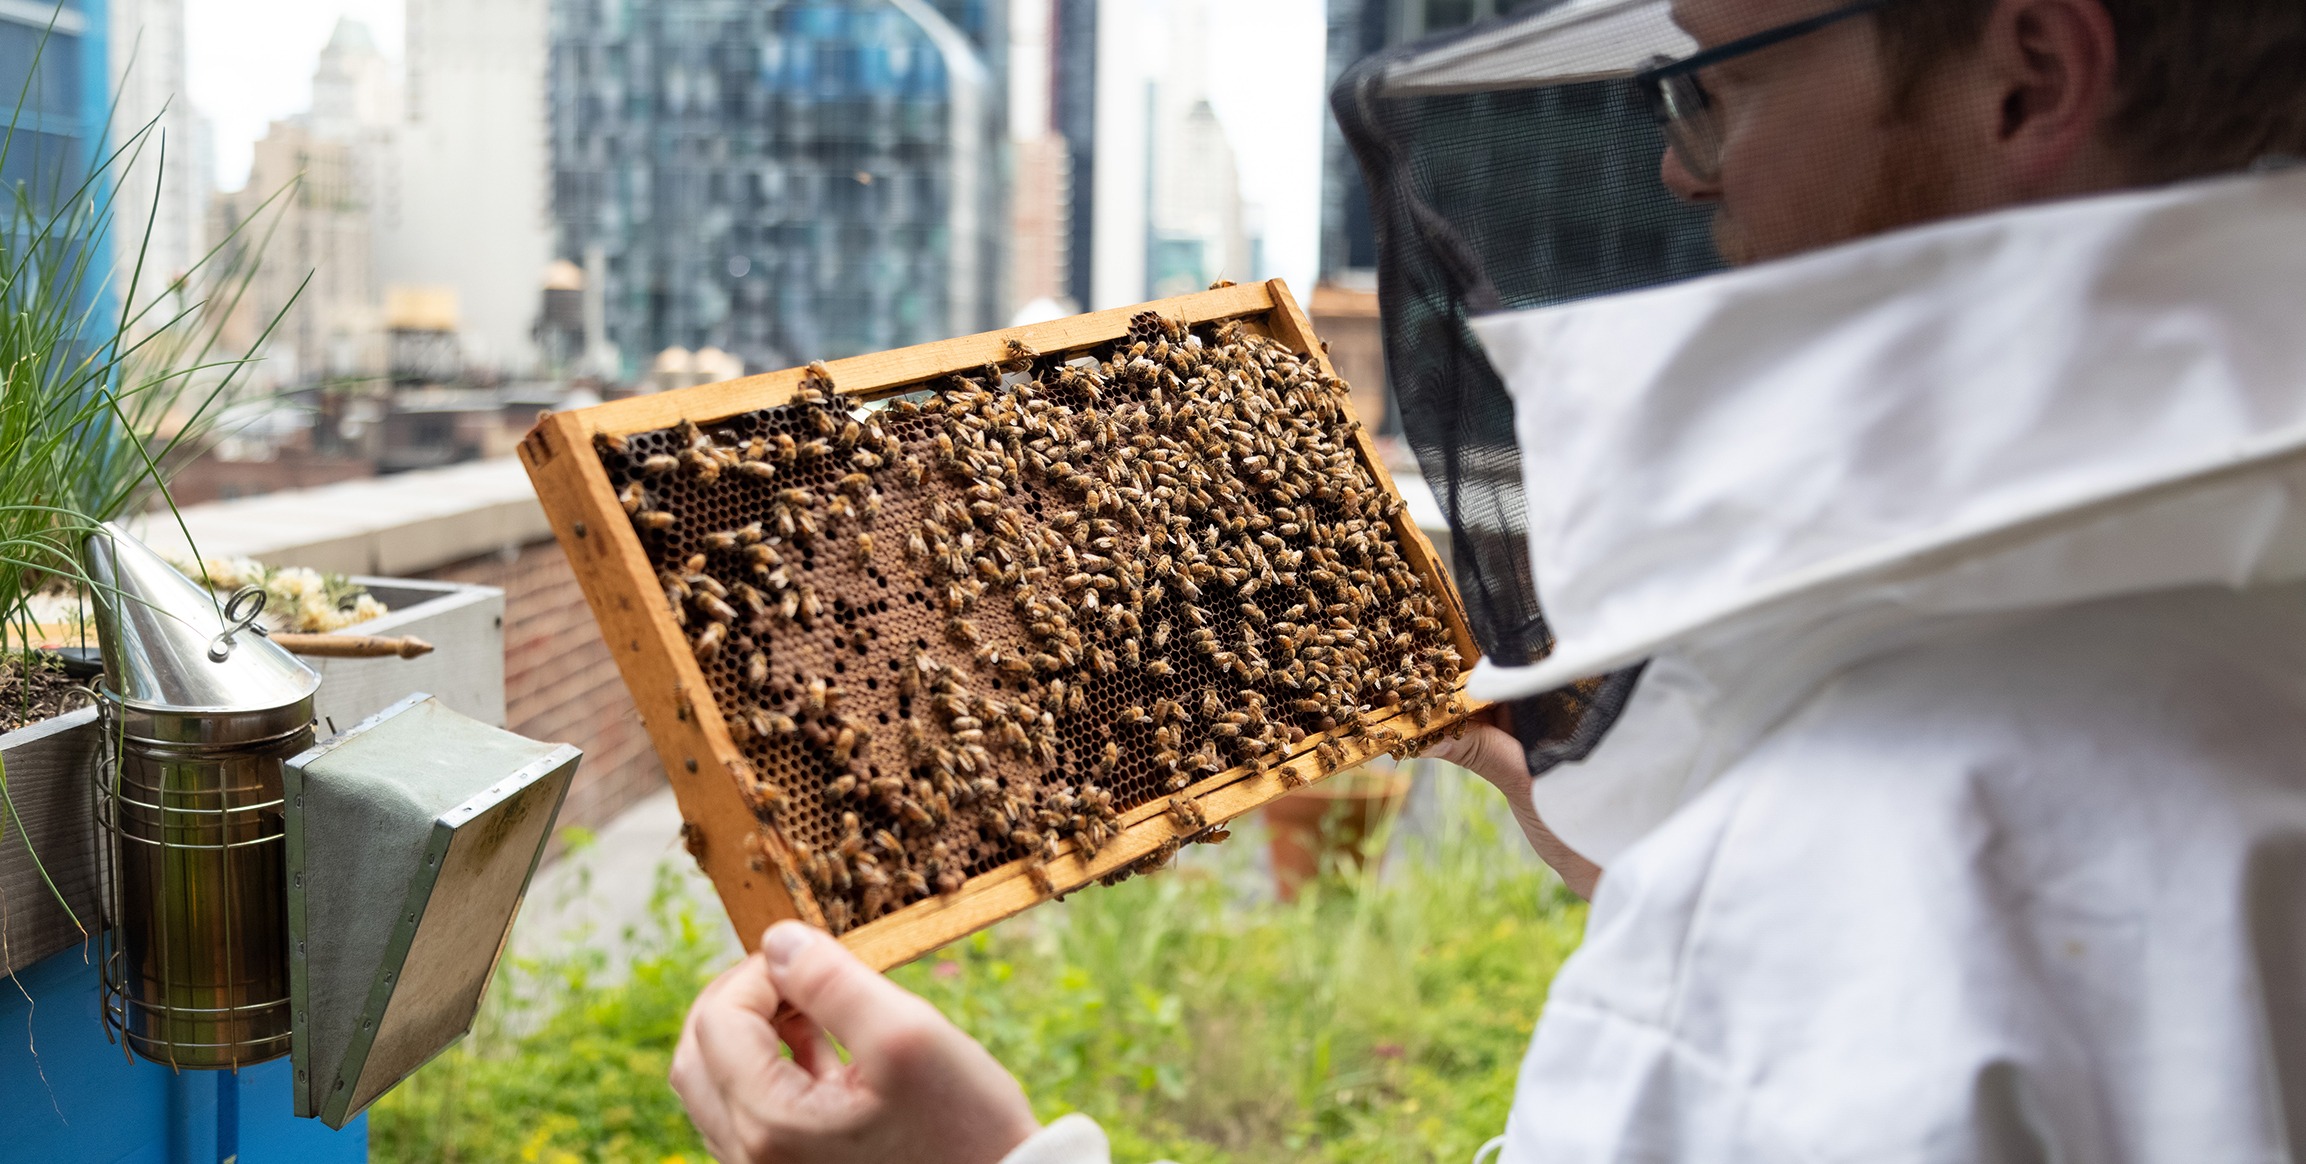 Image of beekeeper inspecting beehive.